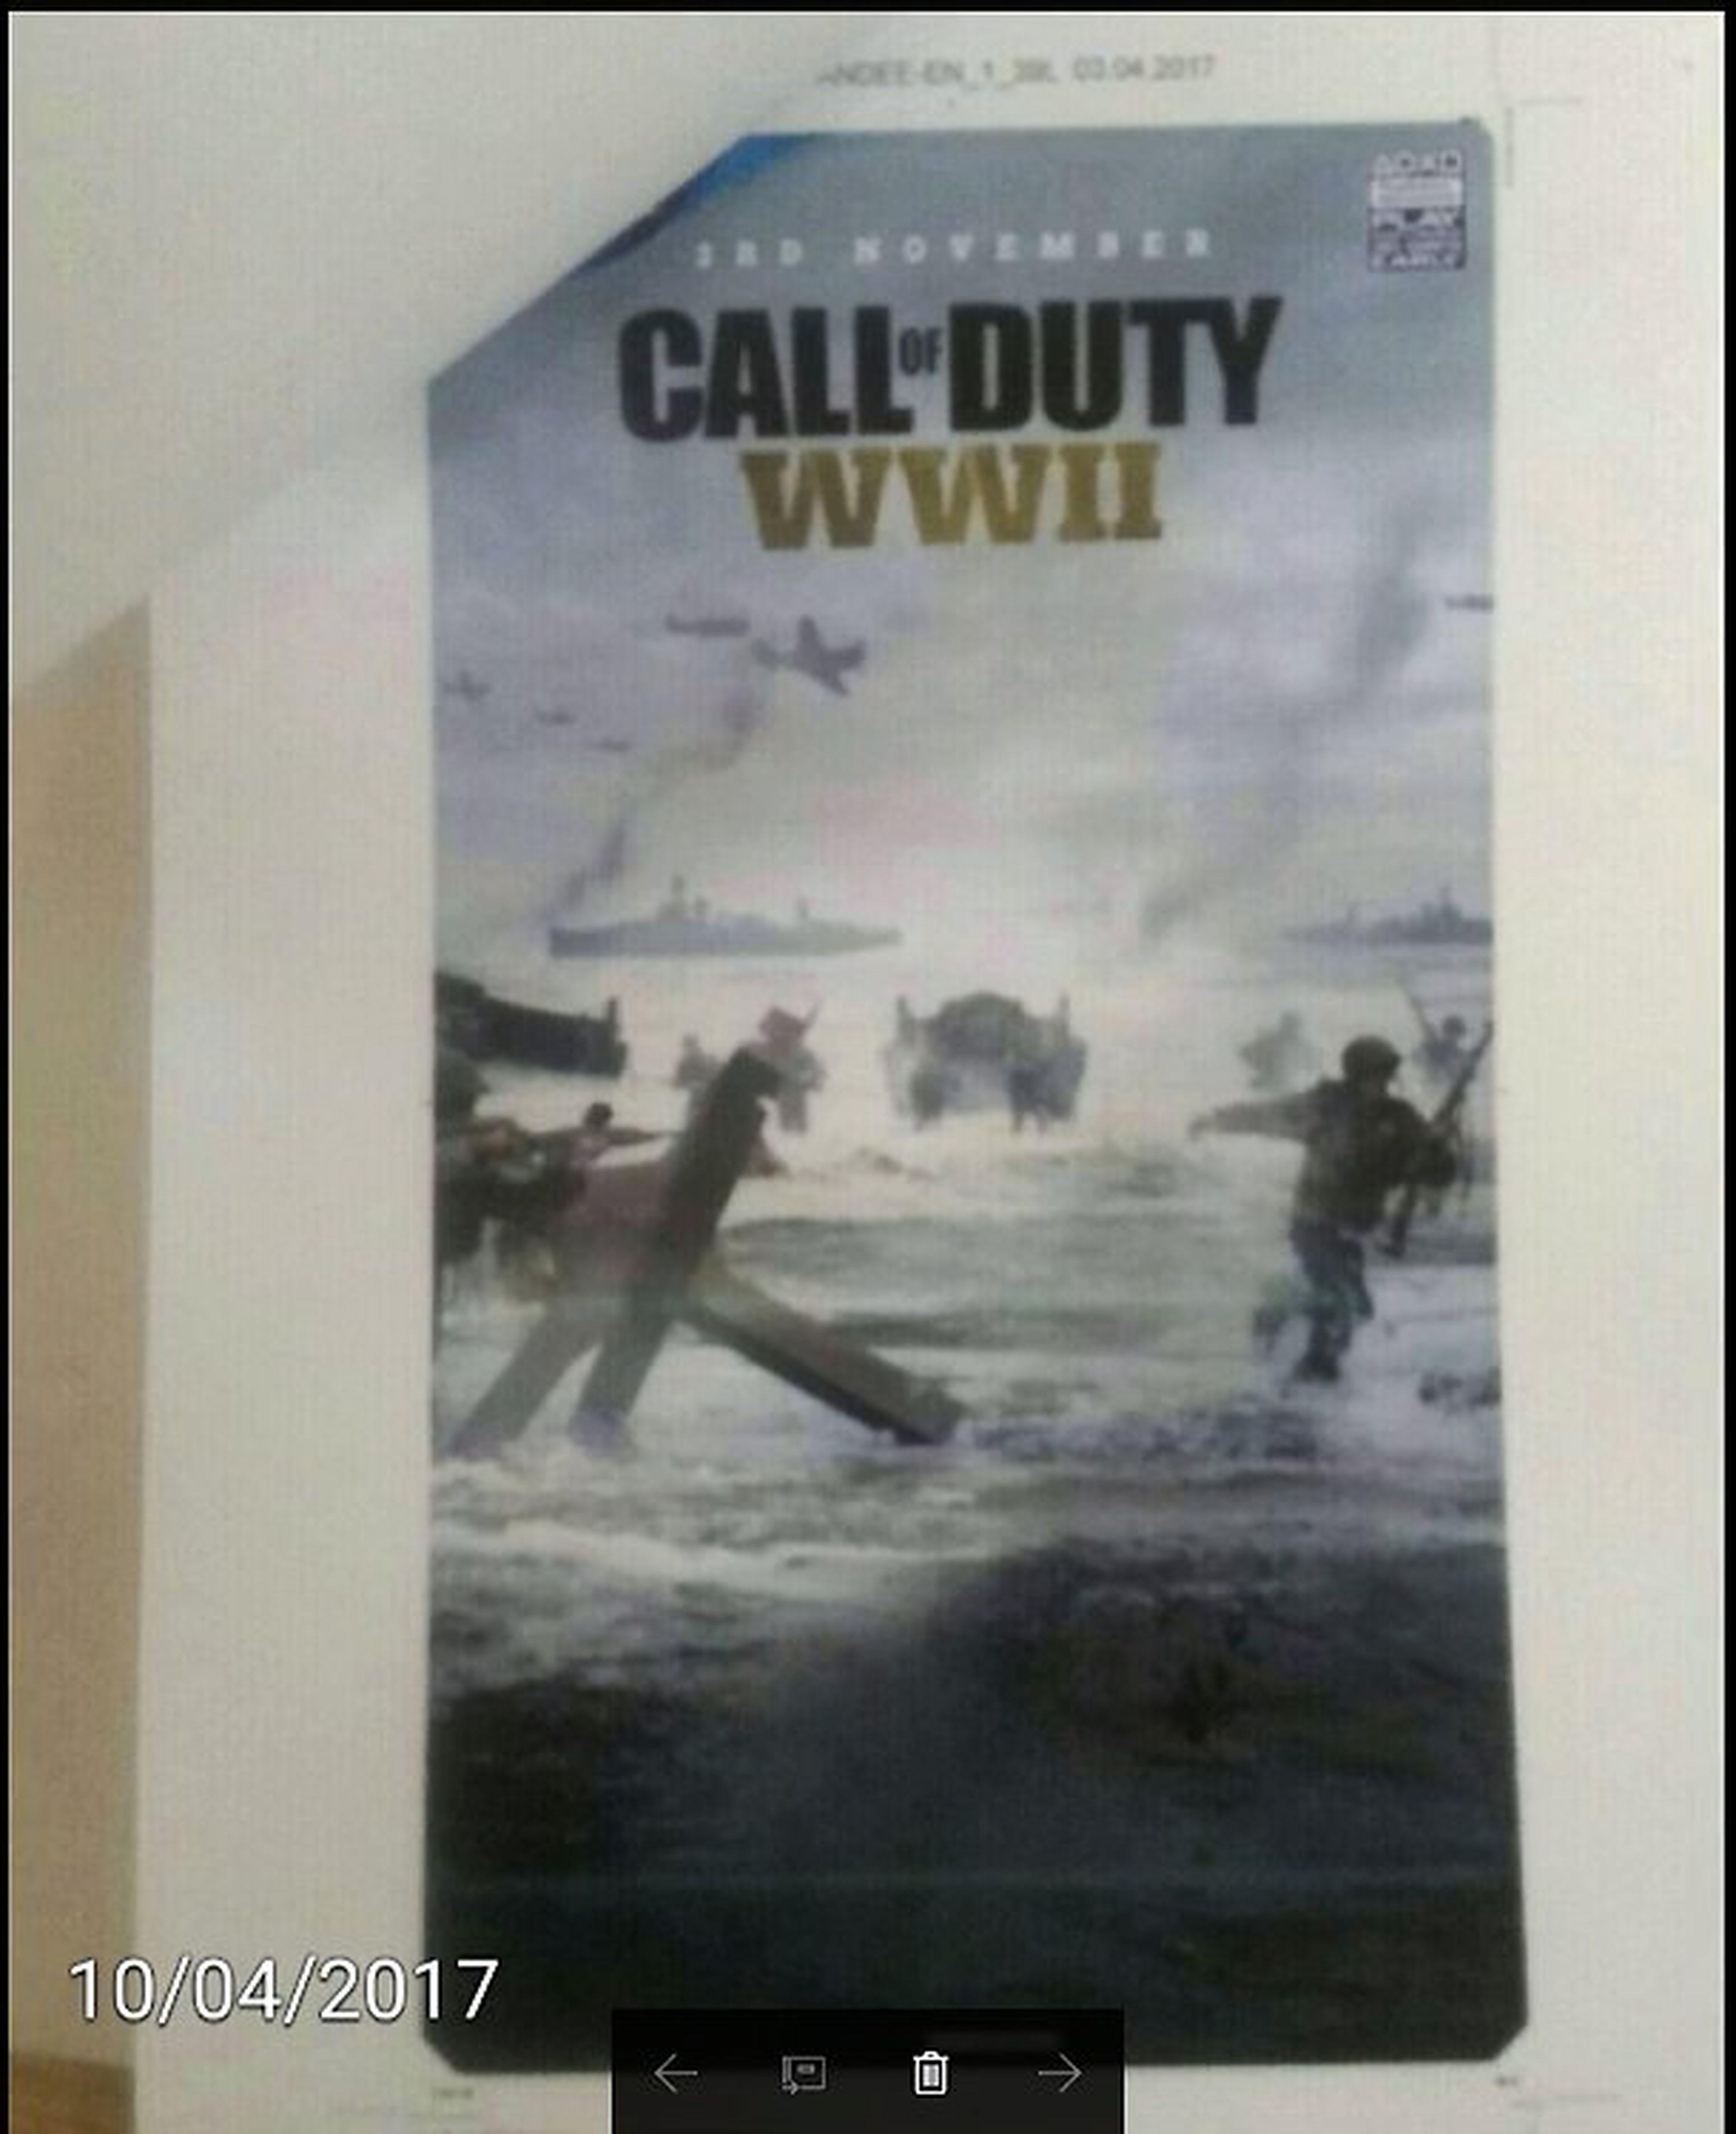 Posible fecha de Call of Duty WWII